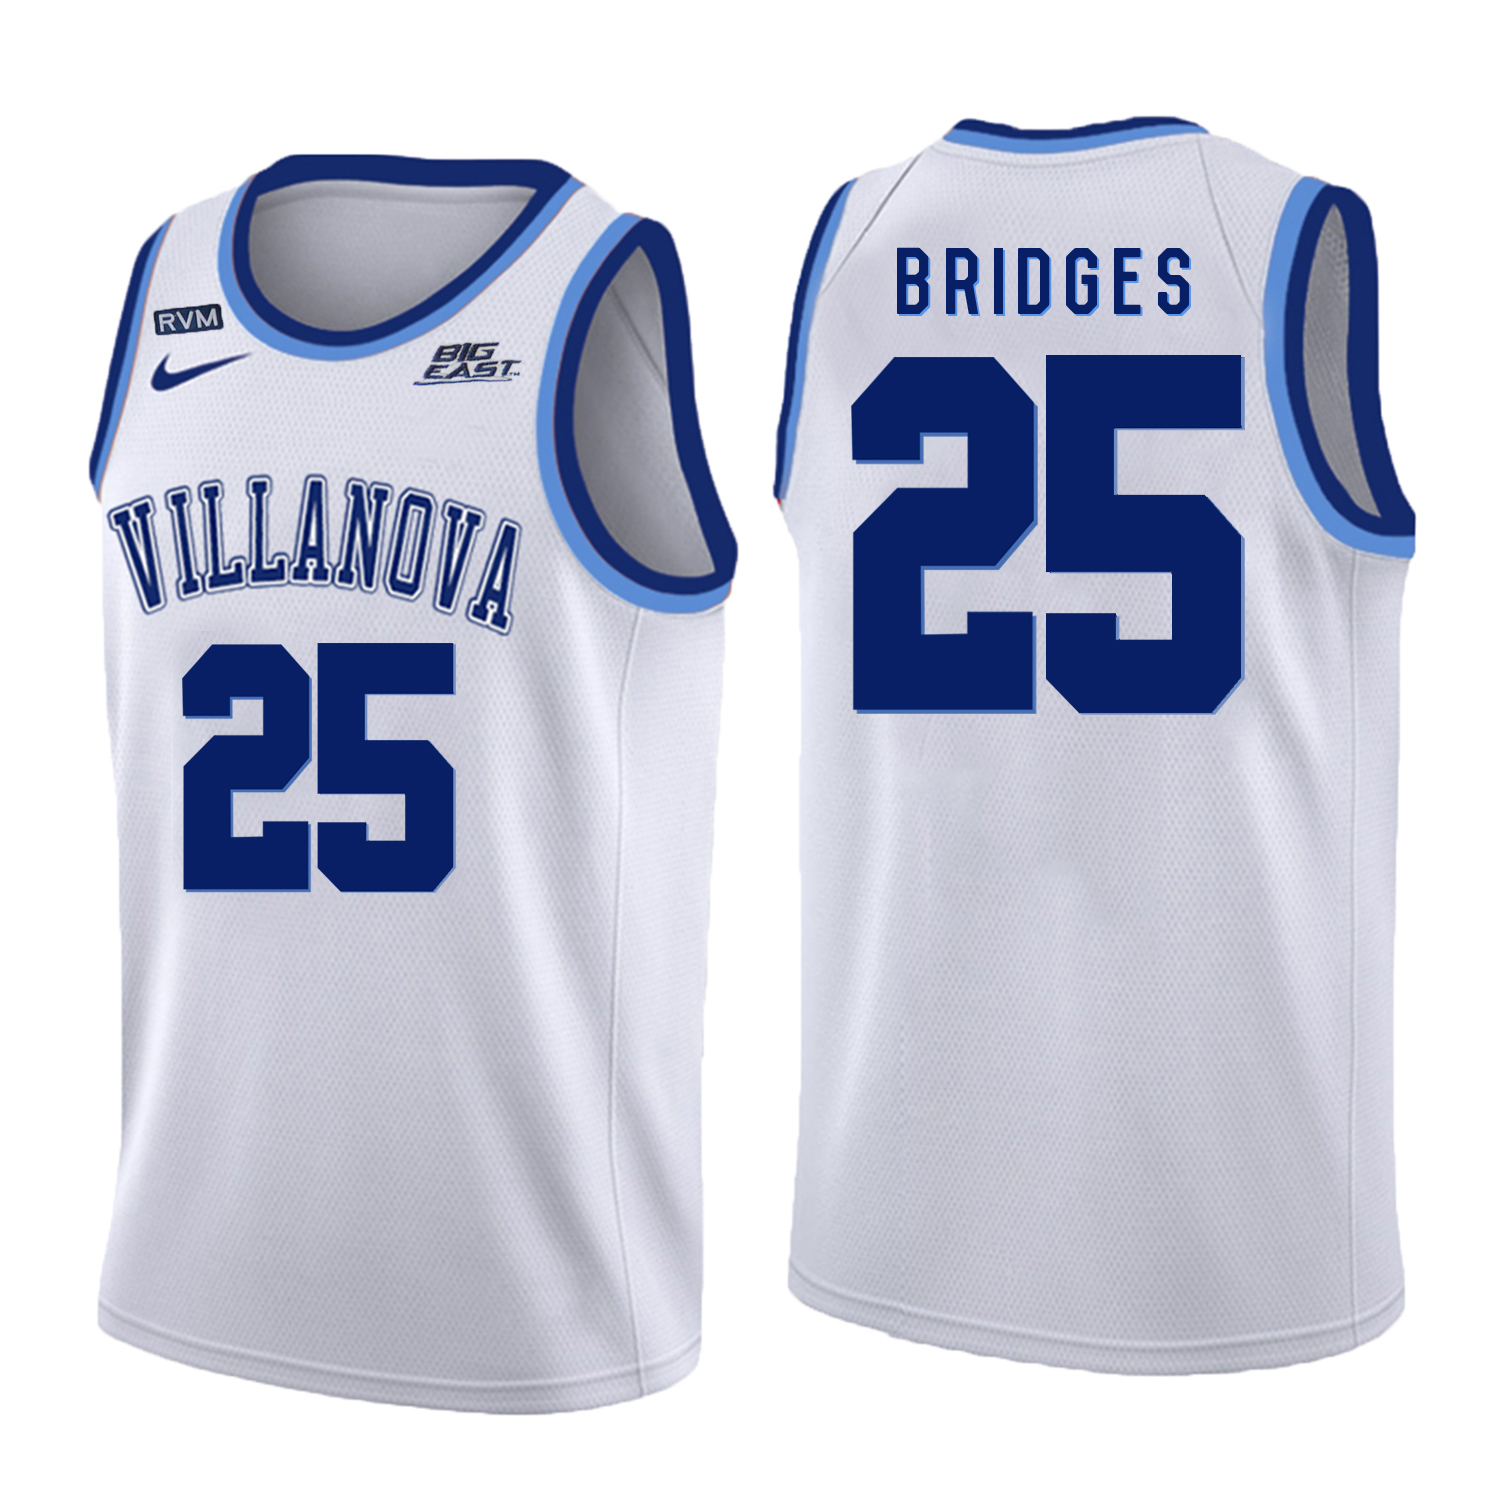 Villanova Wildcats 25 Mikal Bridges White College Basketball Jersey